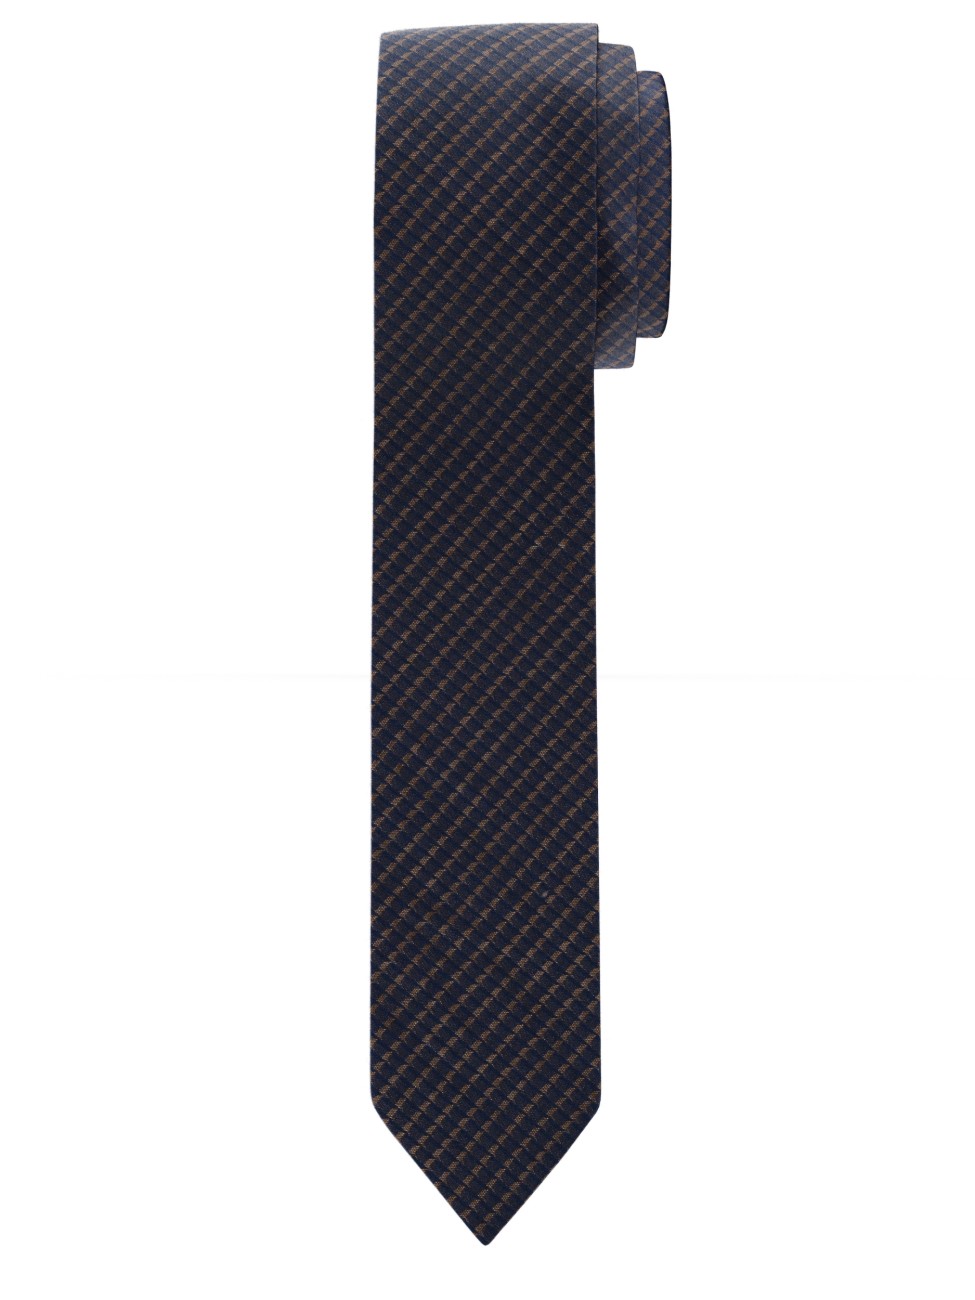 1791/00 OLYMP online Krawatten kaufen